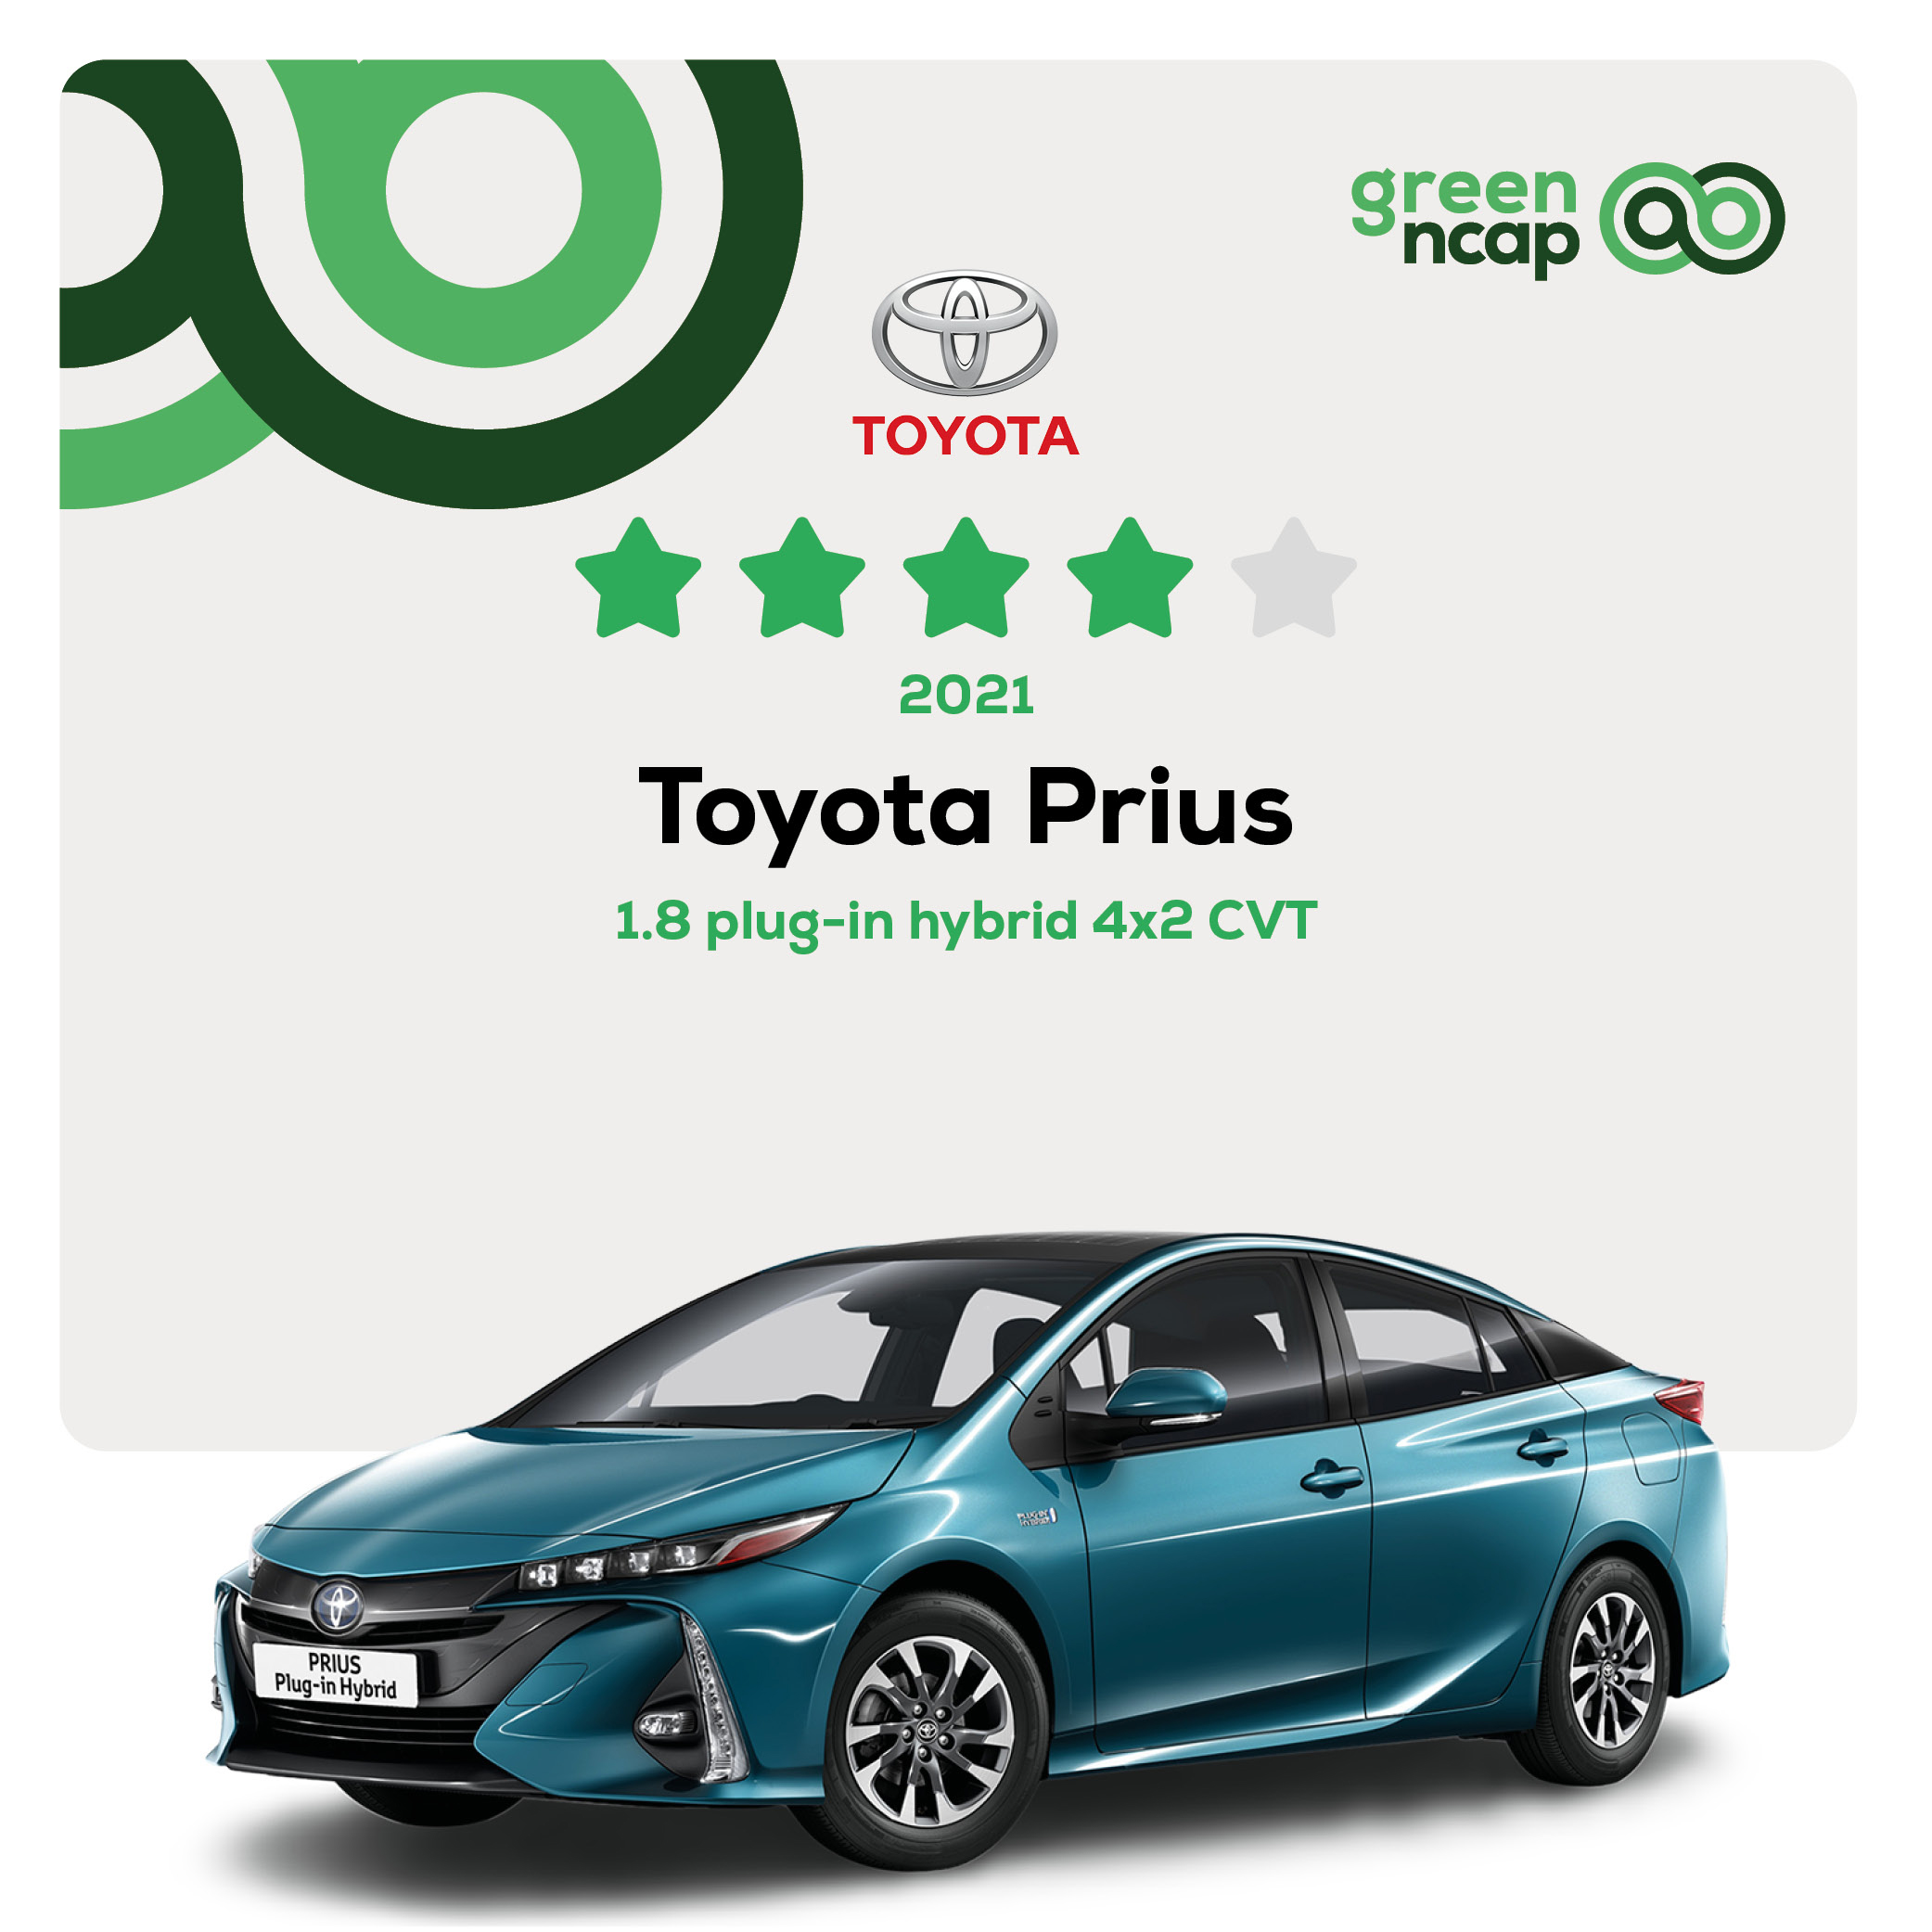 Toyota Prius - Green NCAP Results February 2021 - 4 stars